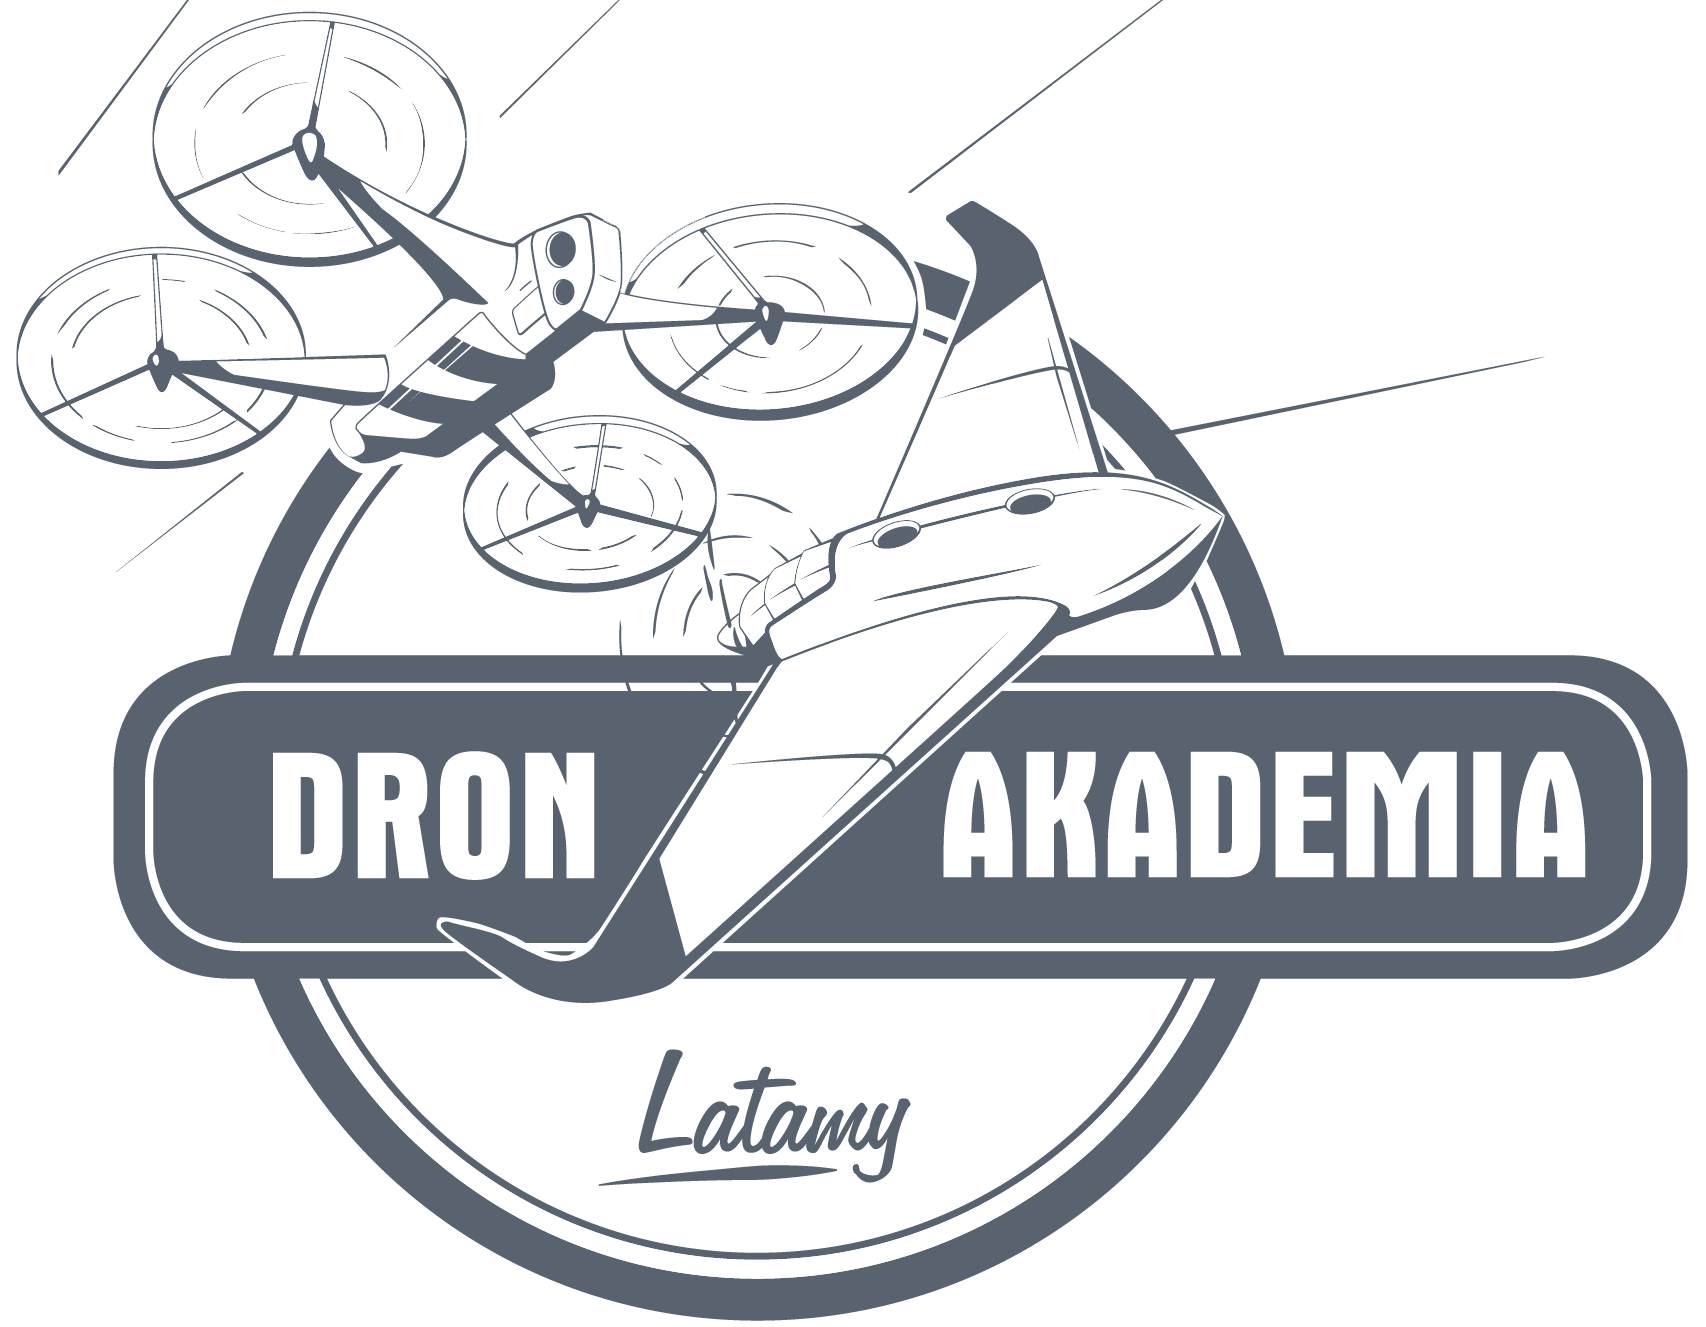 Drona Akademia